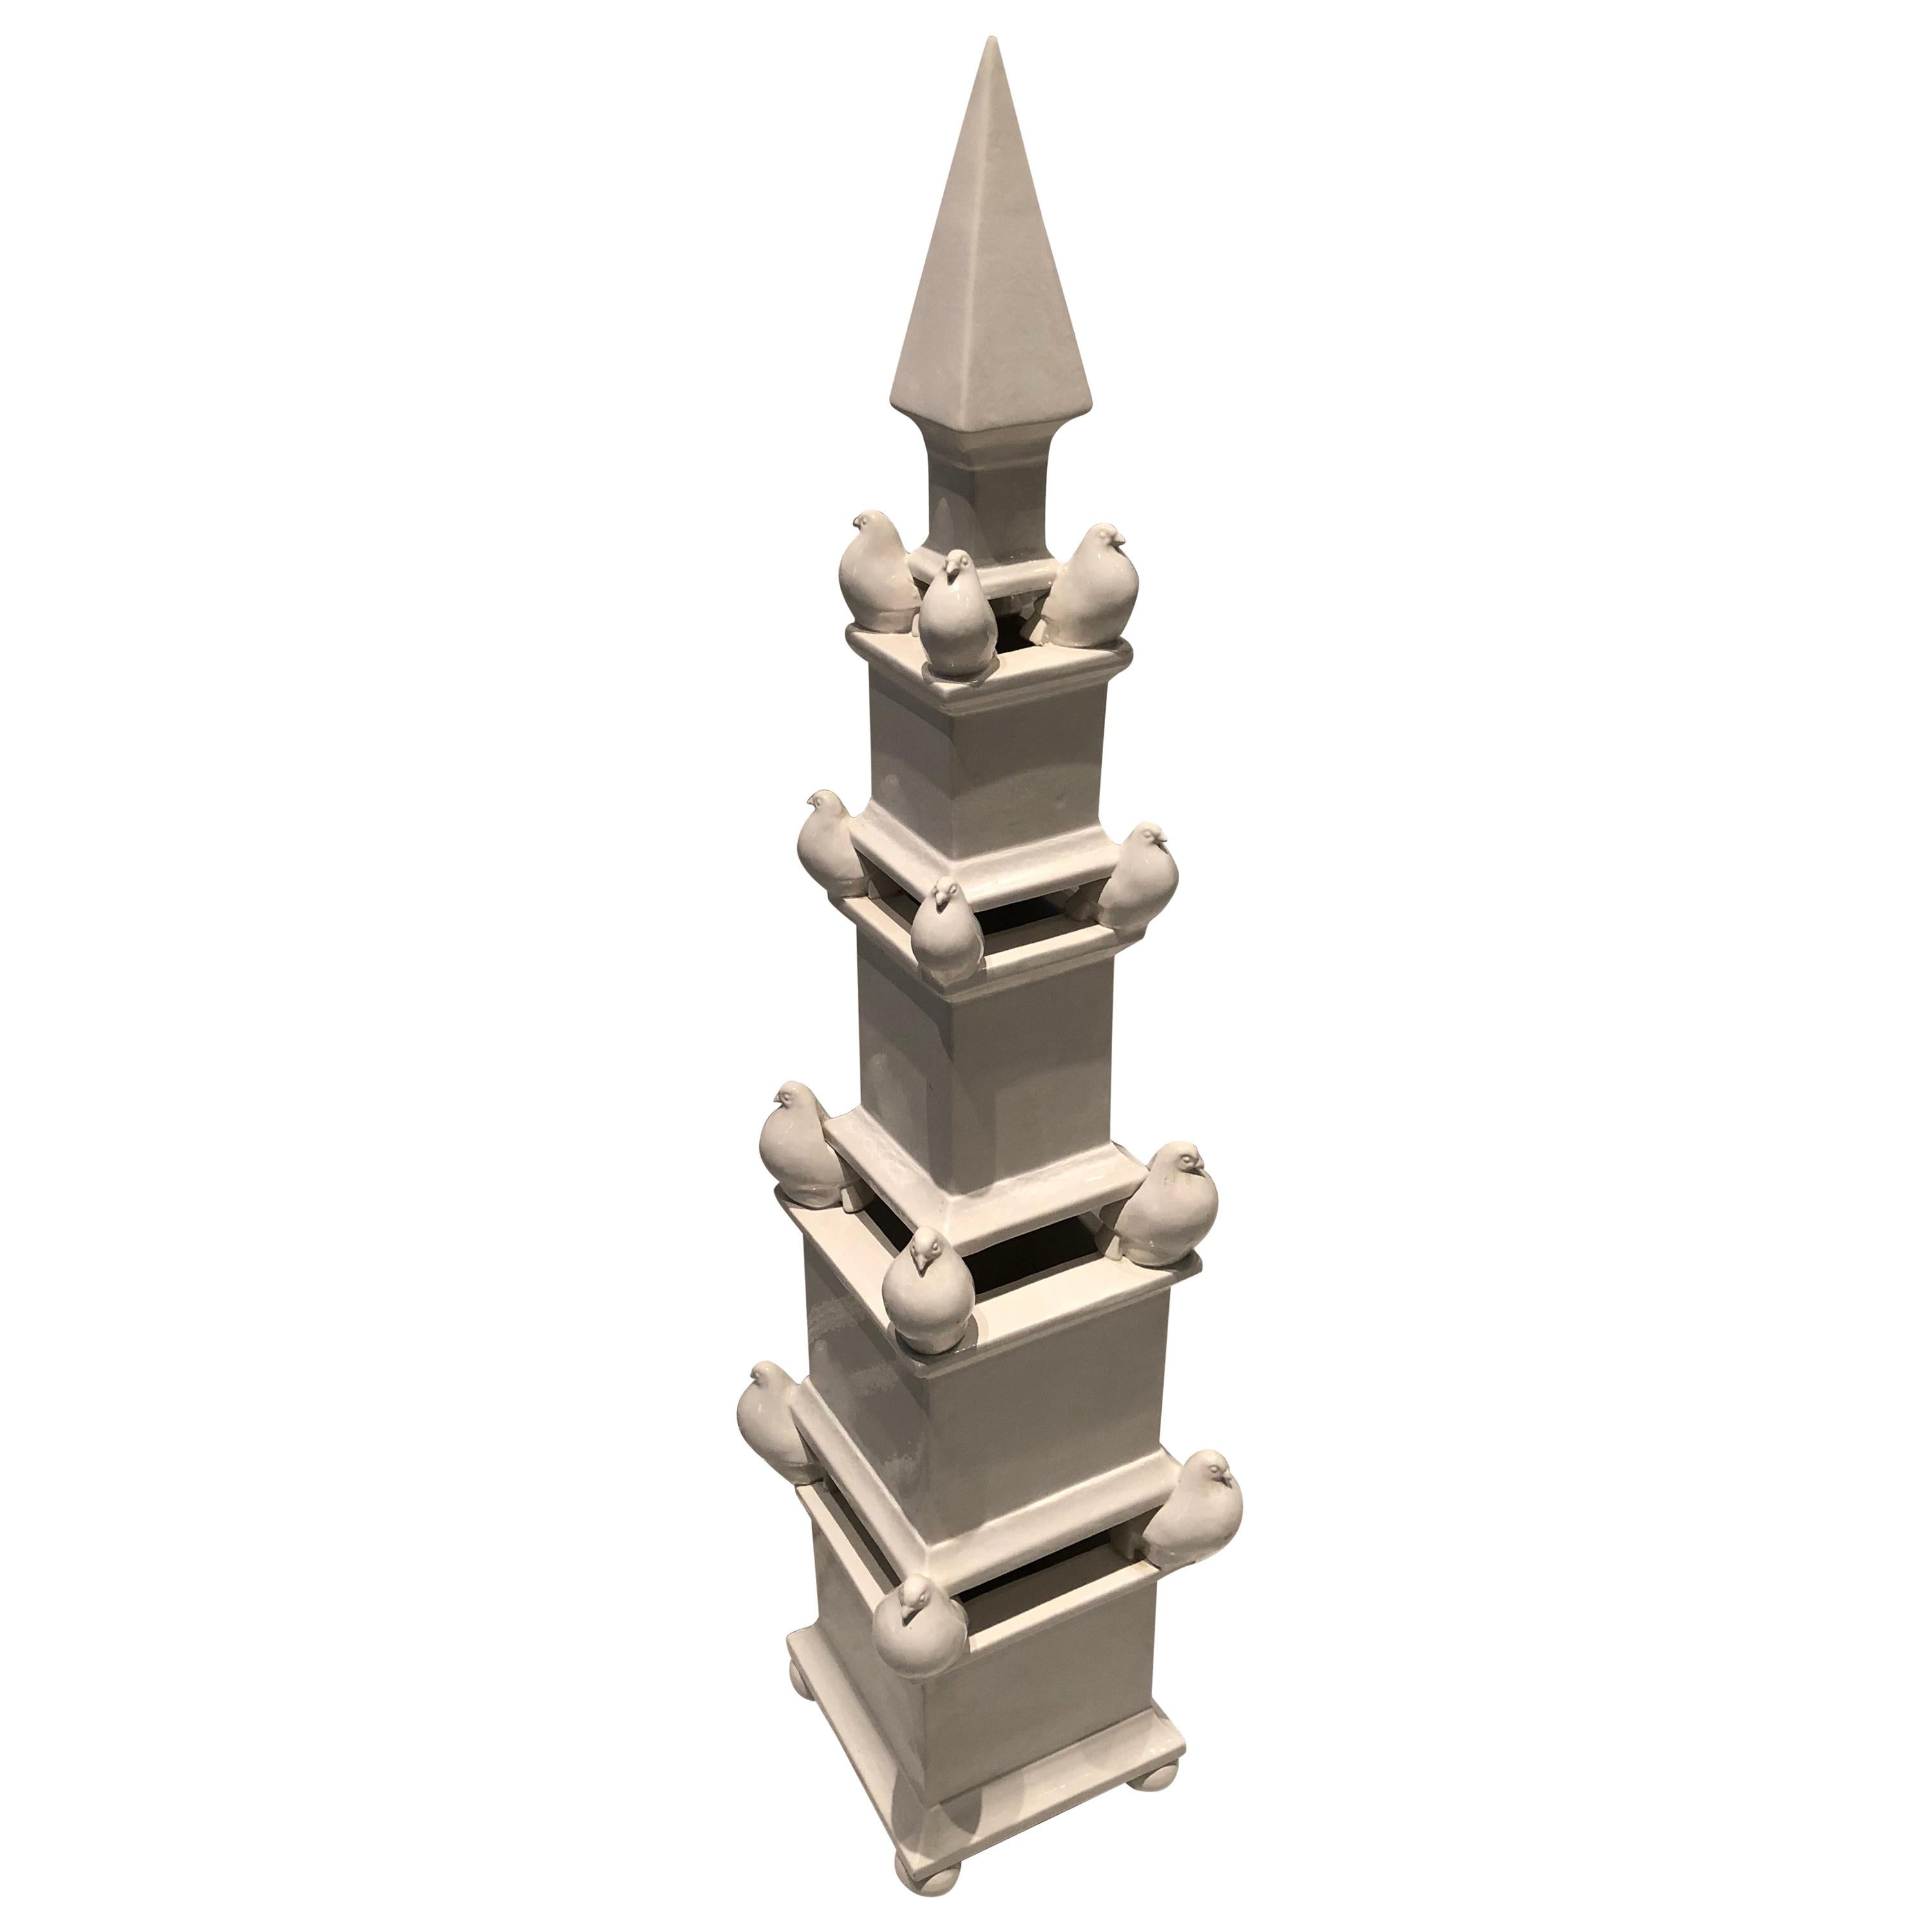 Large White Ceramic Obelisk with Doves from Gumps